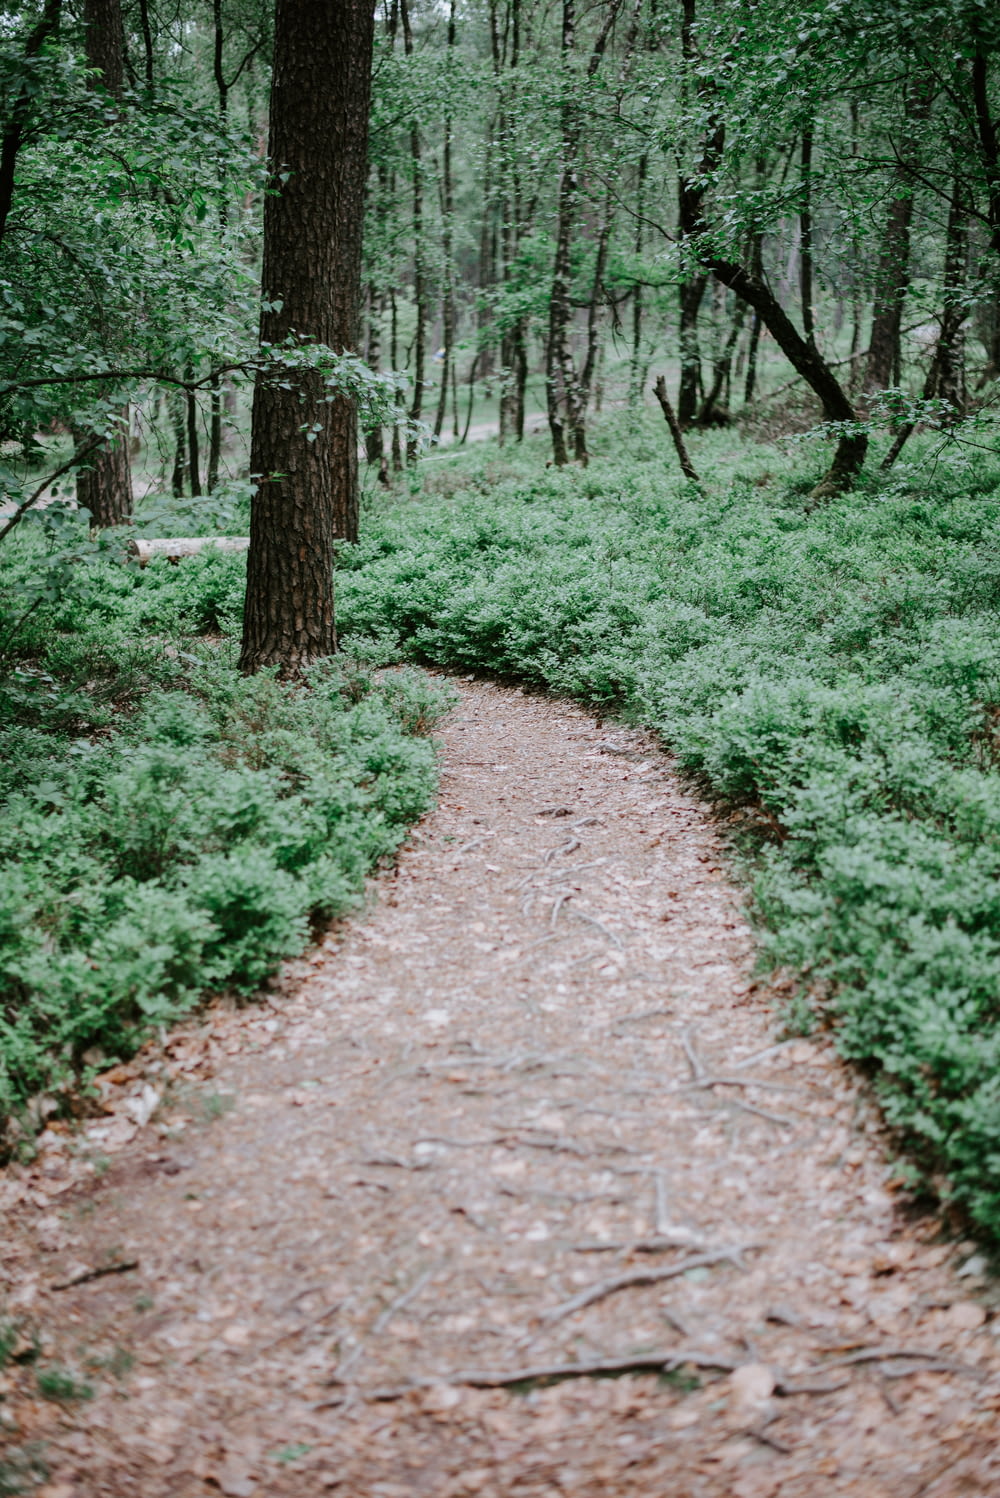 brown pathway between green leafed trees